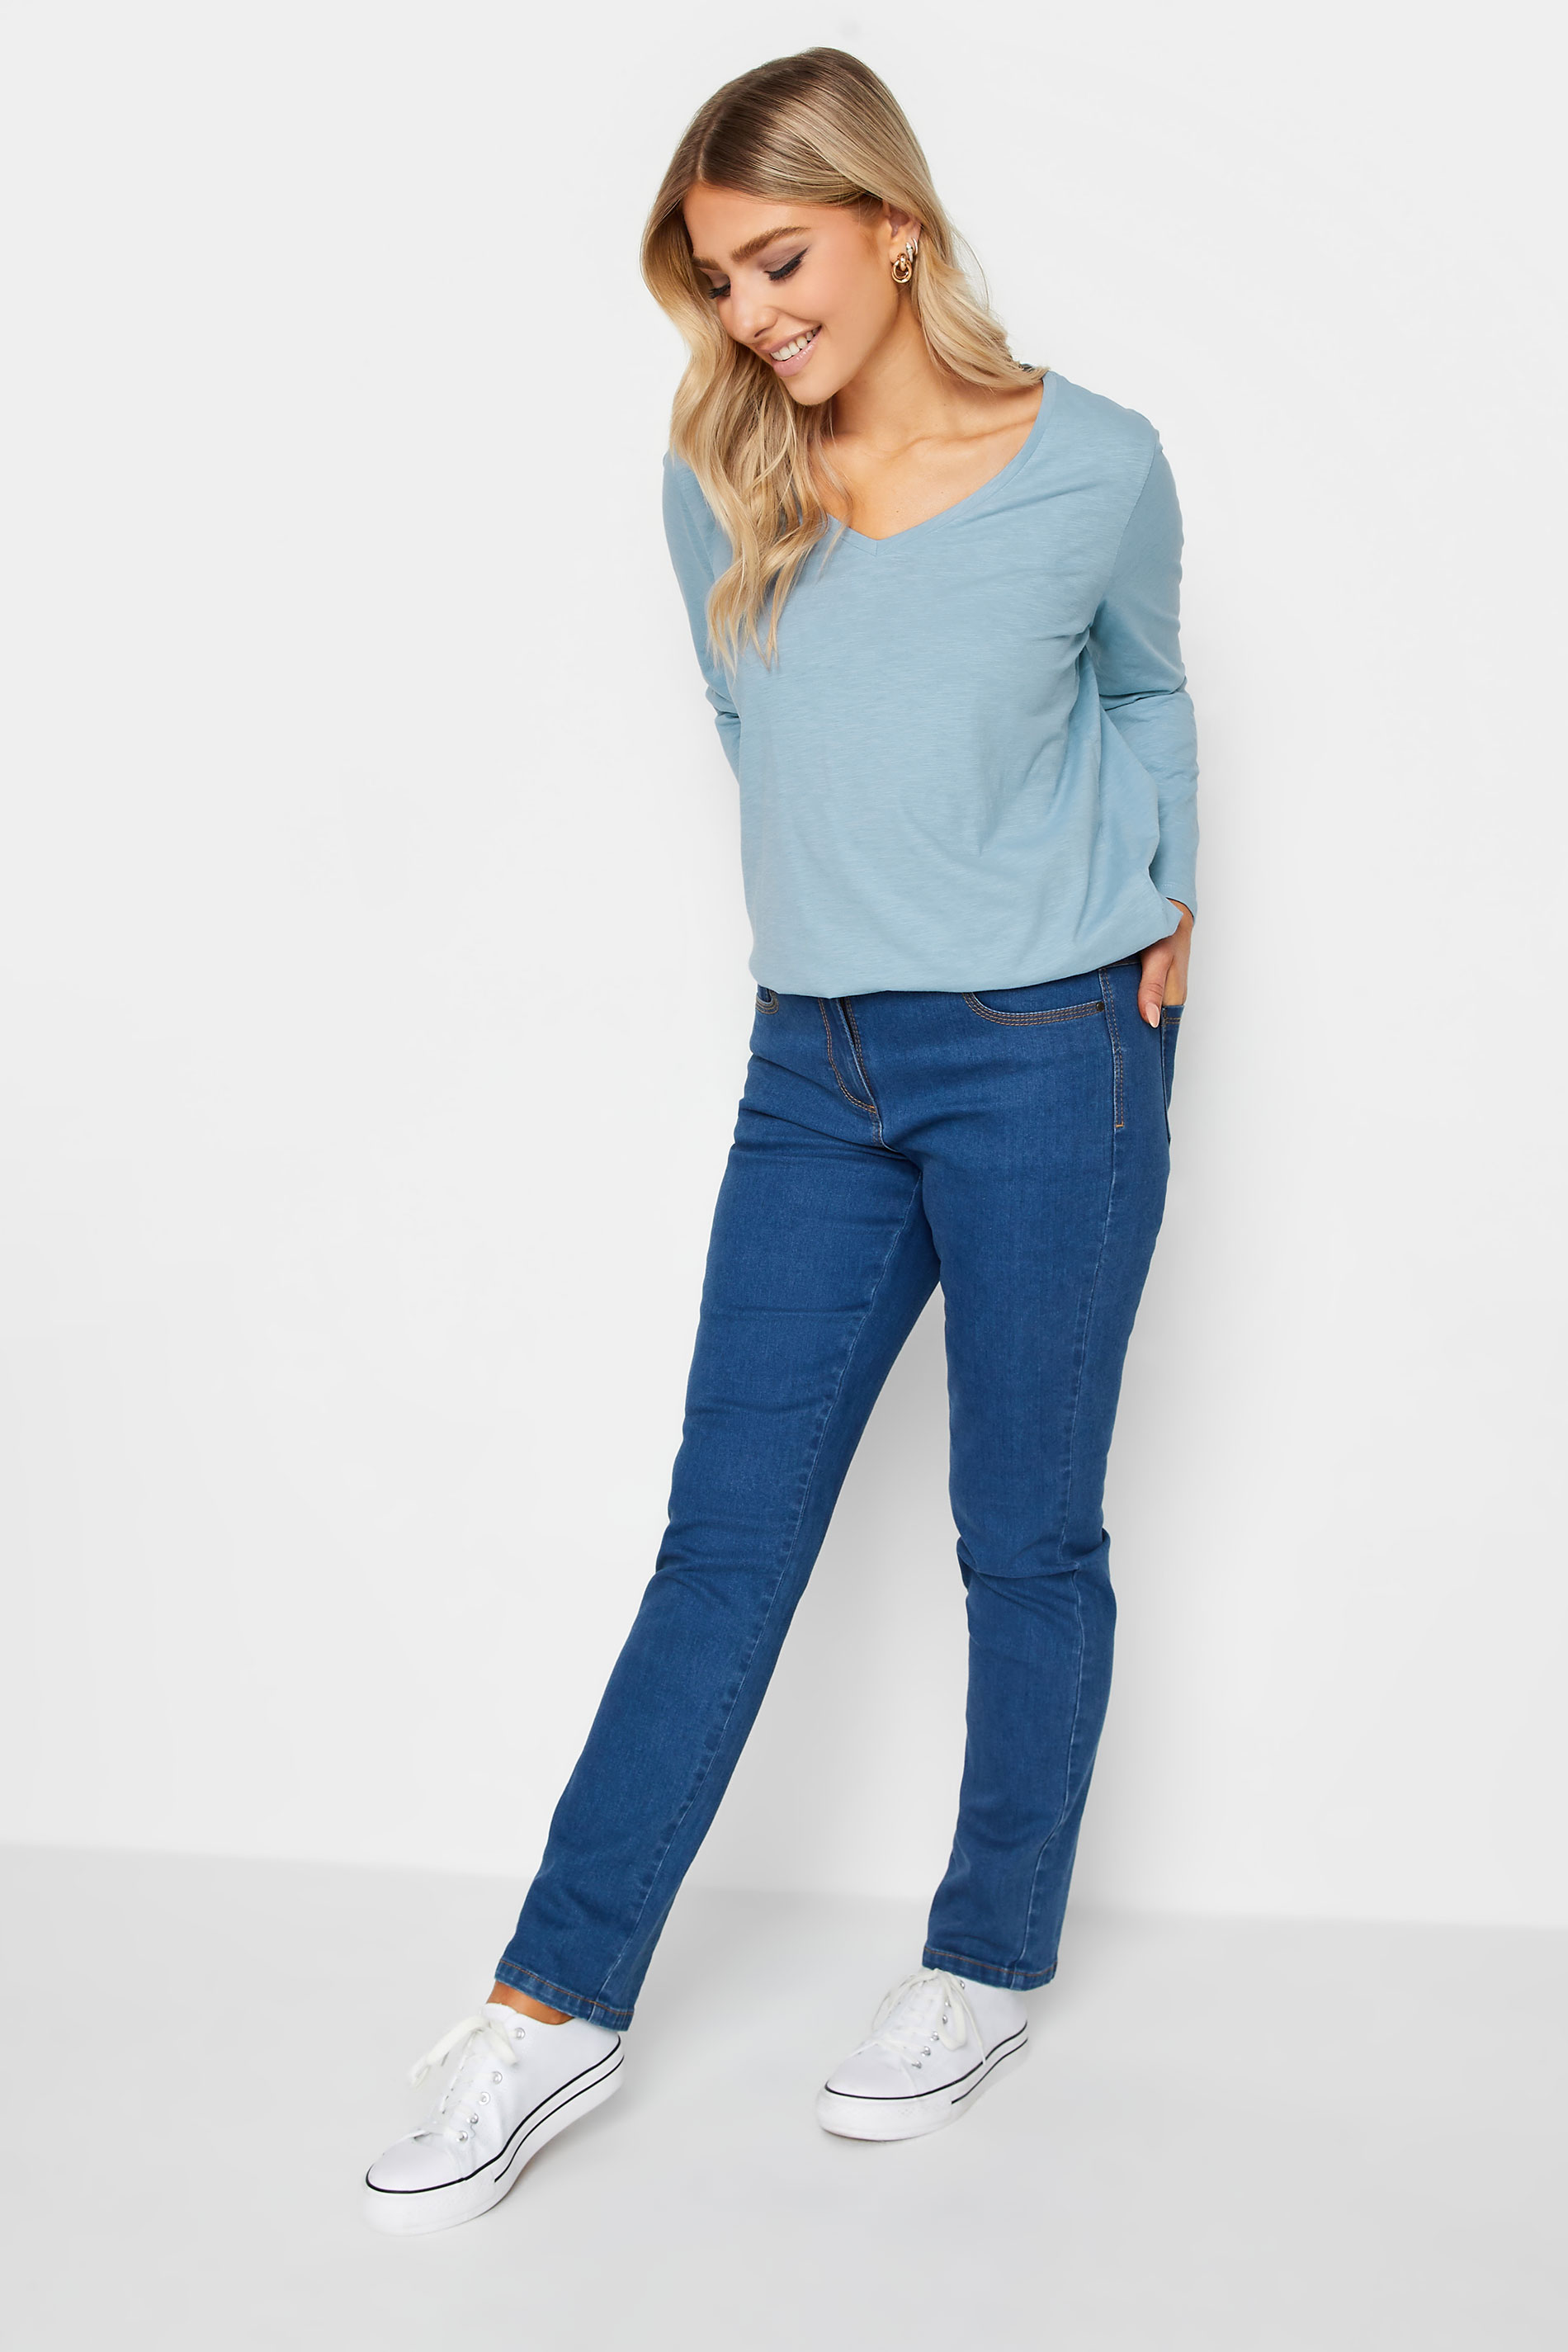 M&Co Light Blue V-Neck Long Sleeve Cotton Blend T-Shirt | M&Co 2